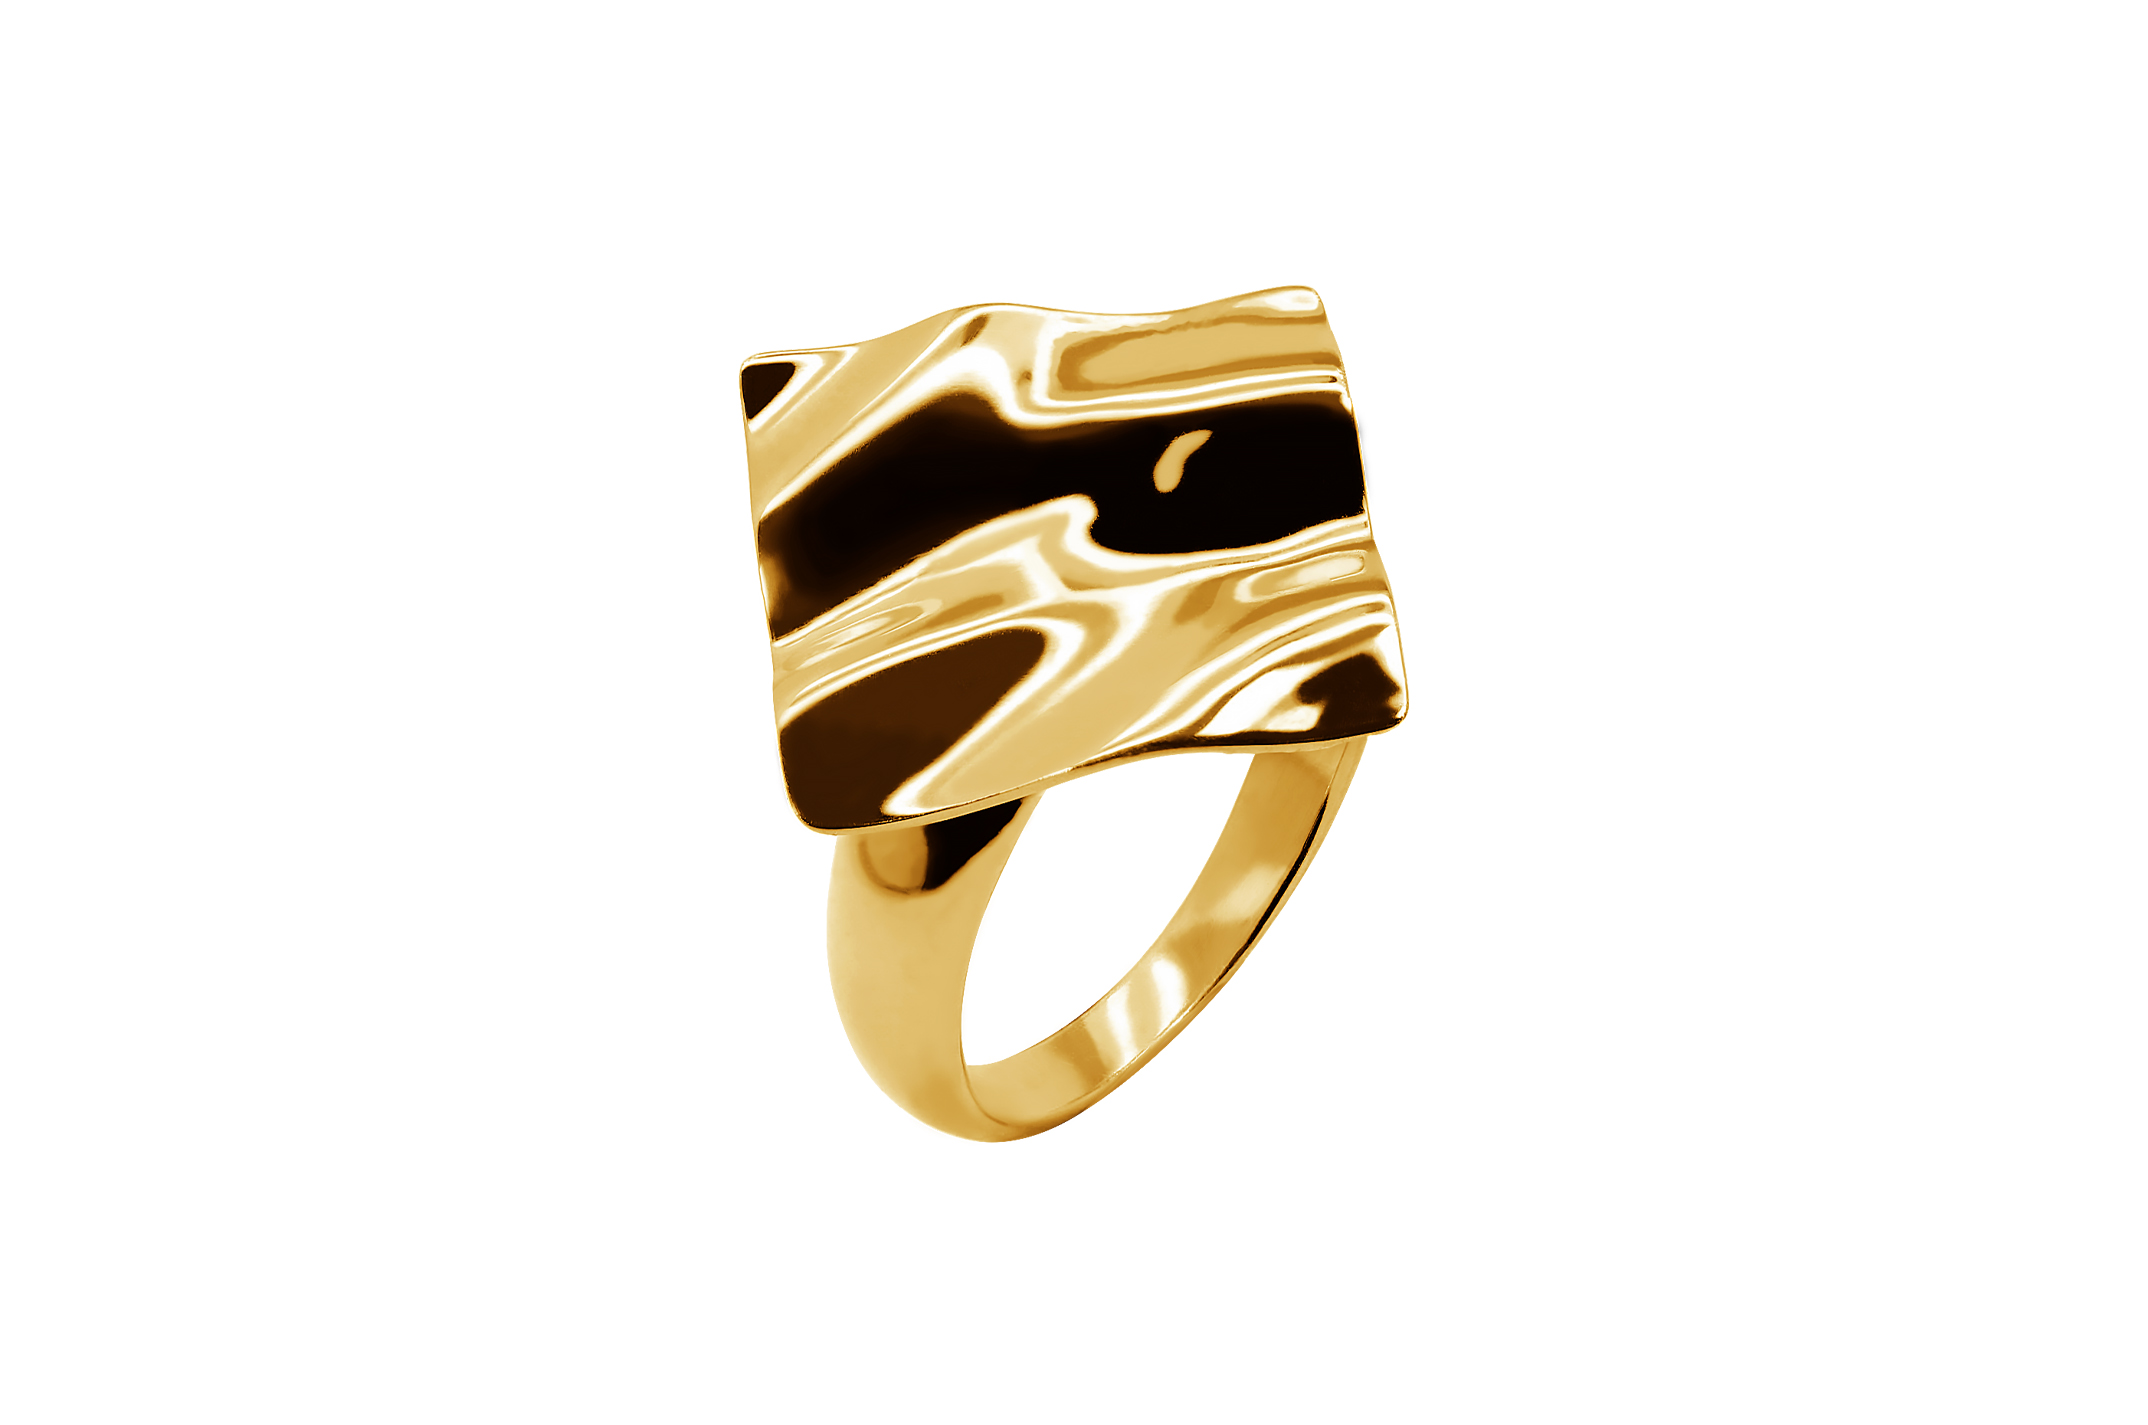 Joia: anel;Material: prata 925;Peso: 5.40 gr;Medida Mesa: 2.8 cm;Cor: amarelo;Género: mulher